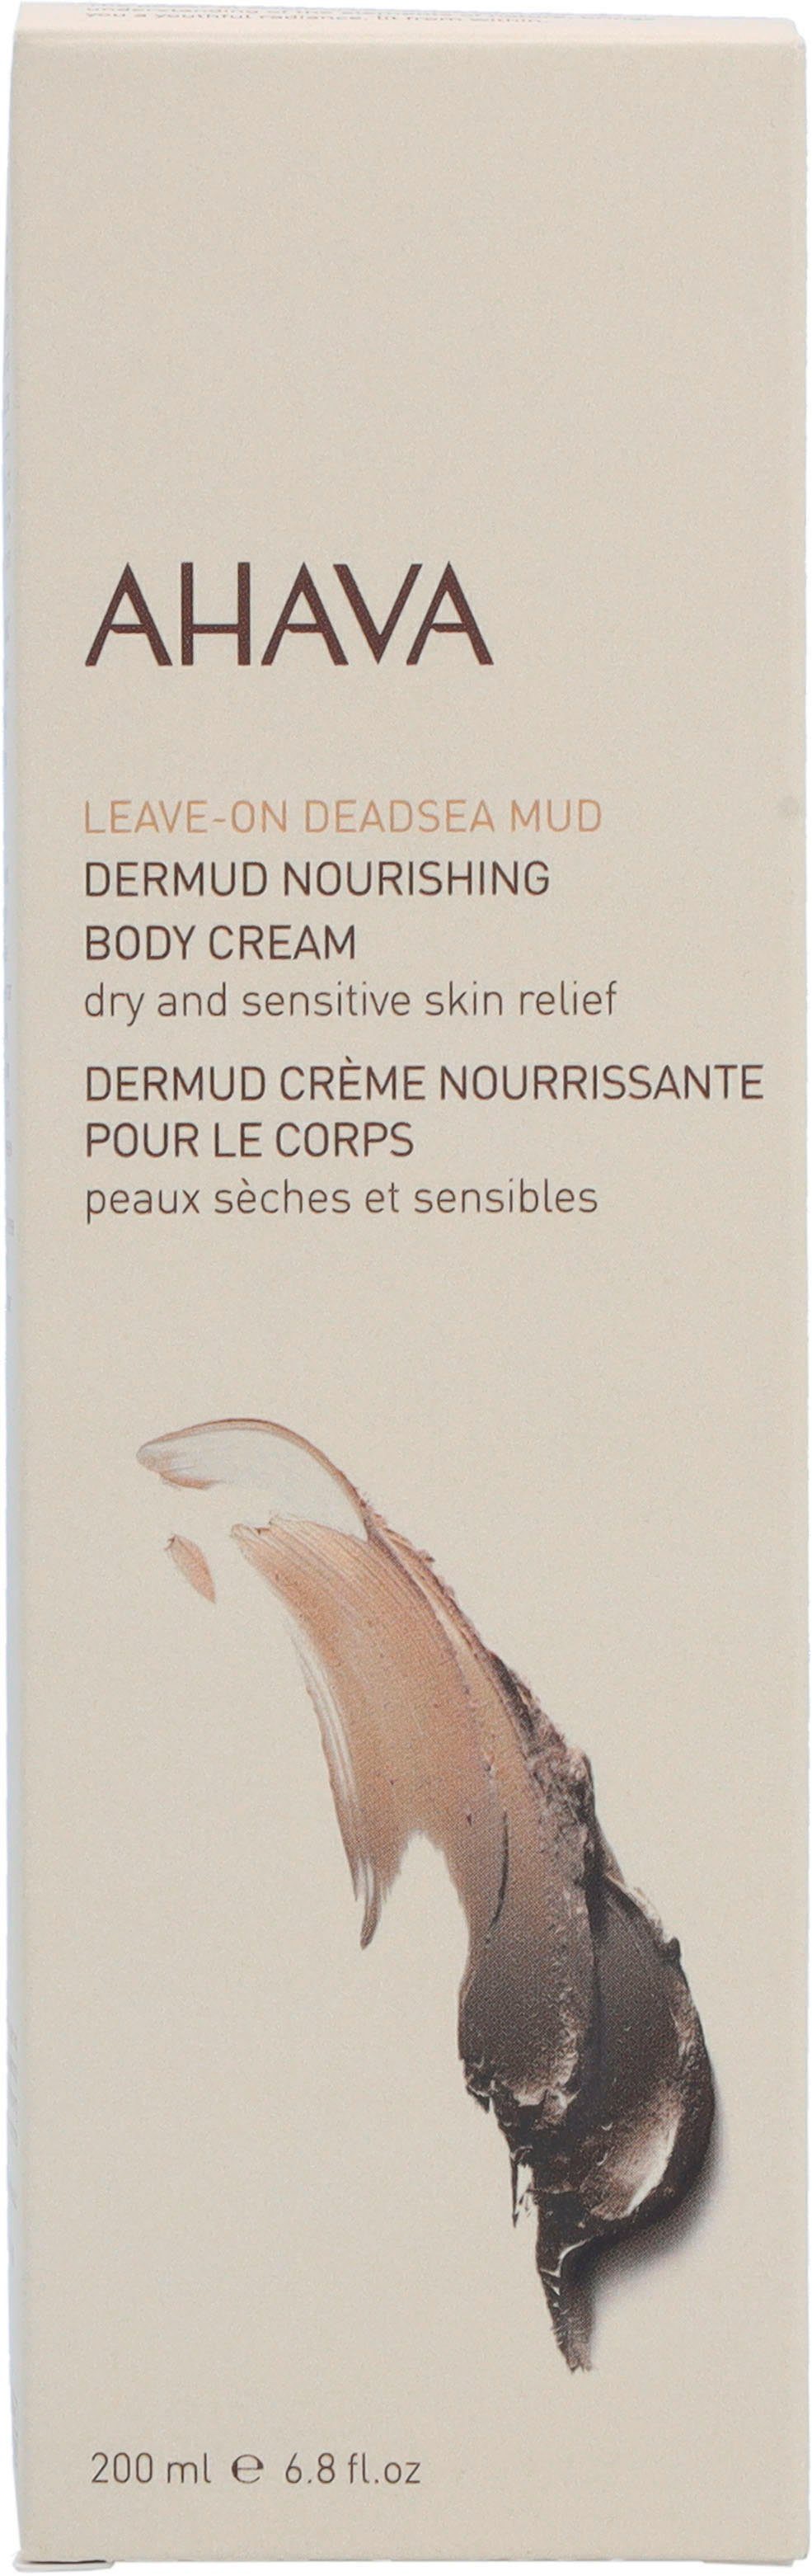 Nourishing Body Mud AHAVA Körpercreme Cream Deadsea Dermud